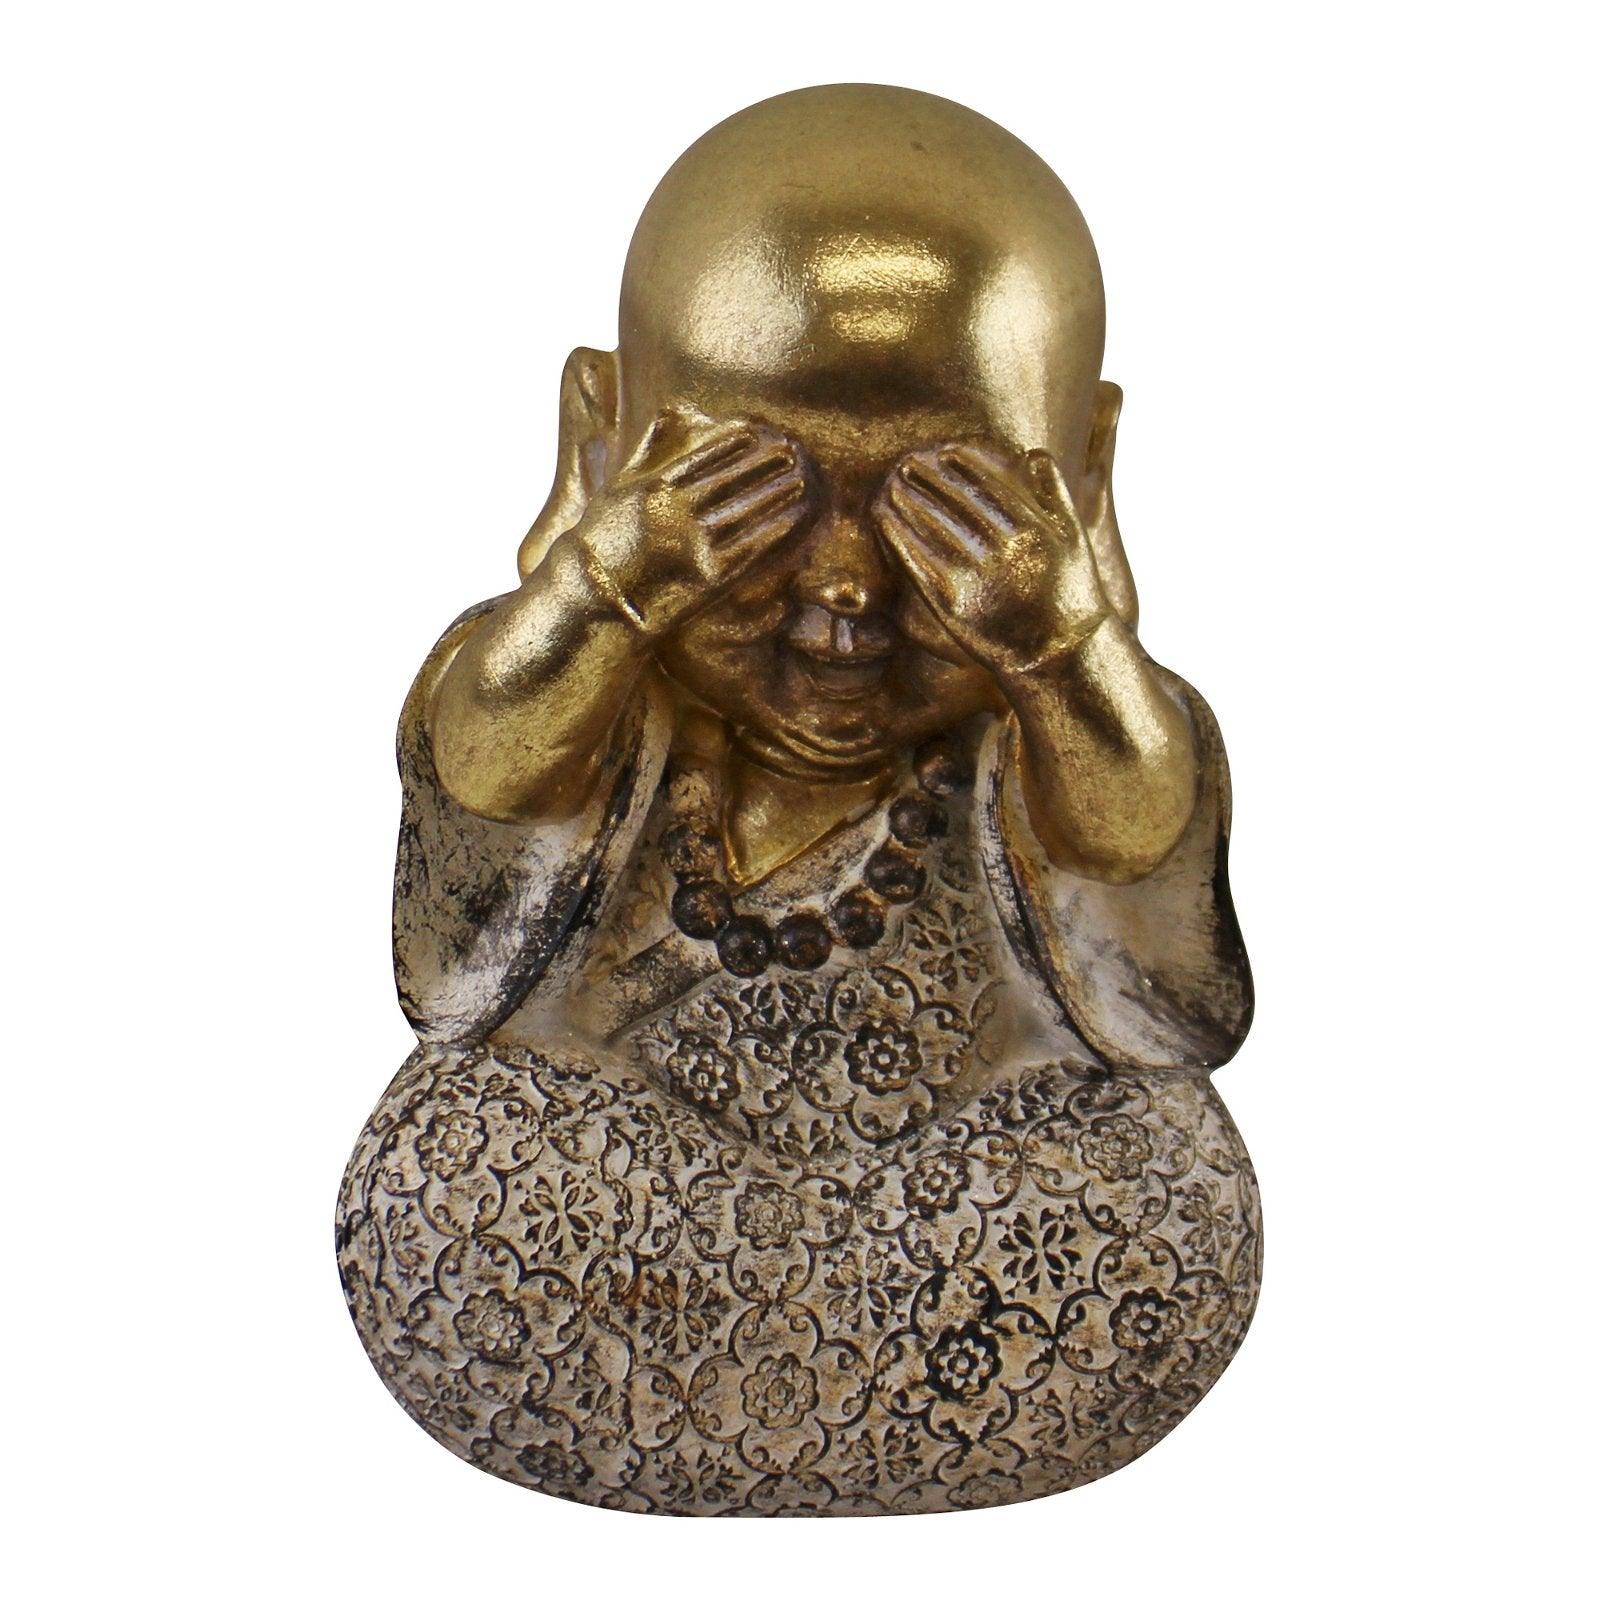 View Set of 3 Gold Buddha Ornaments See No Evil Hear No Evil Speak No Evil information